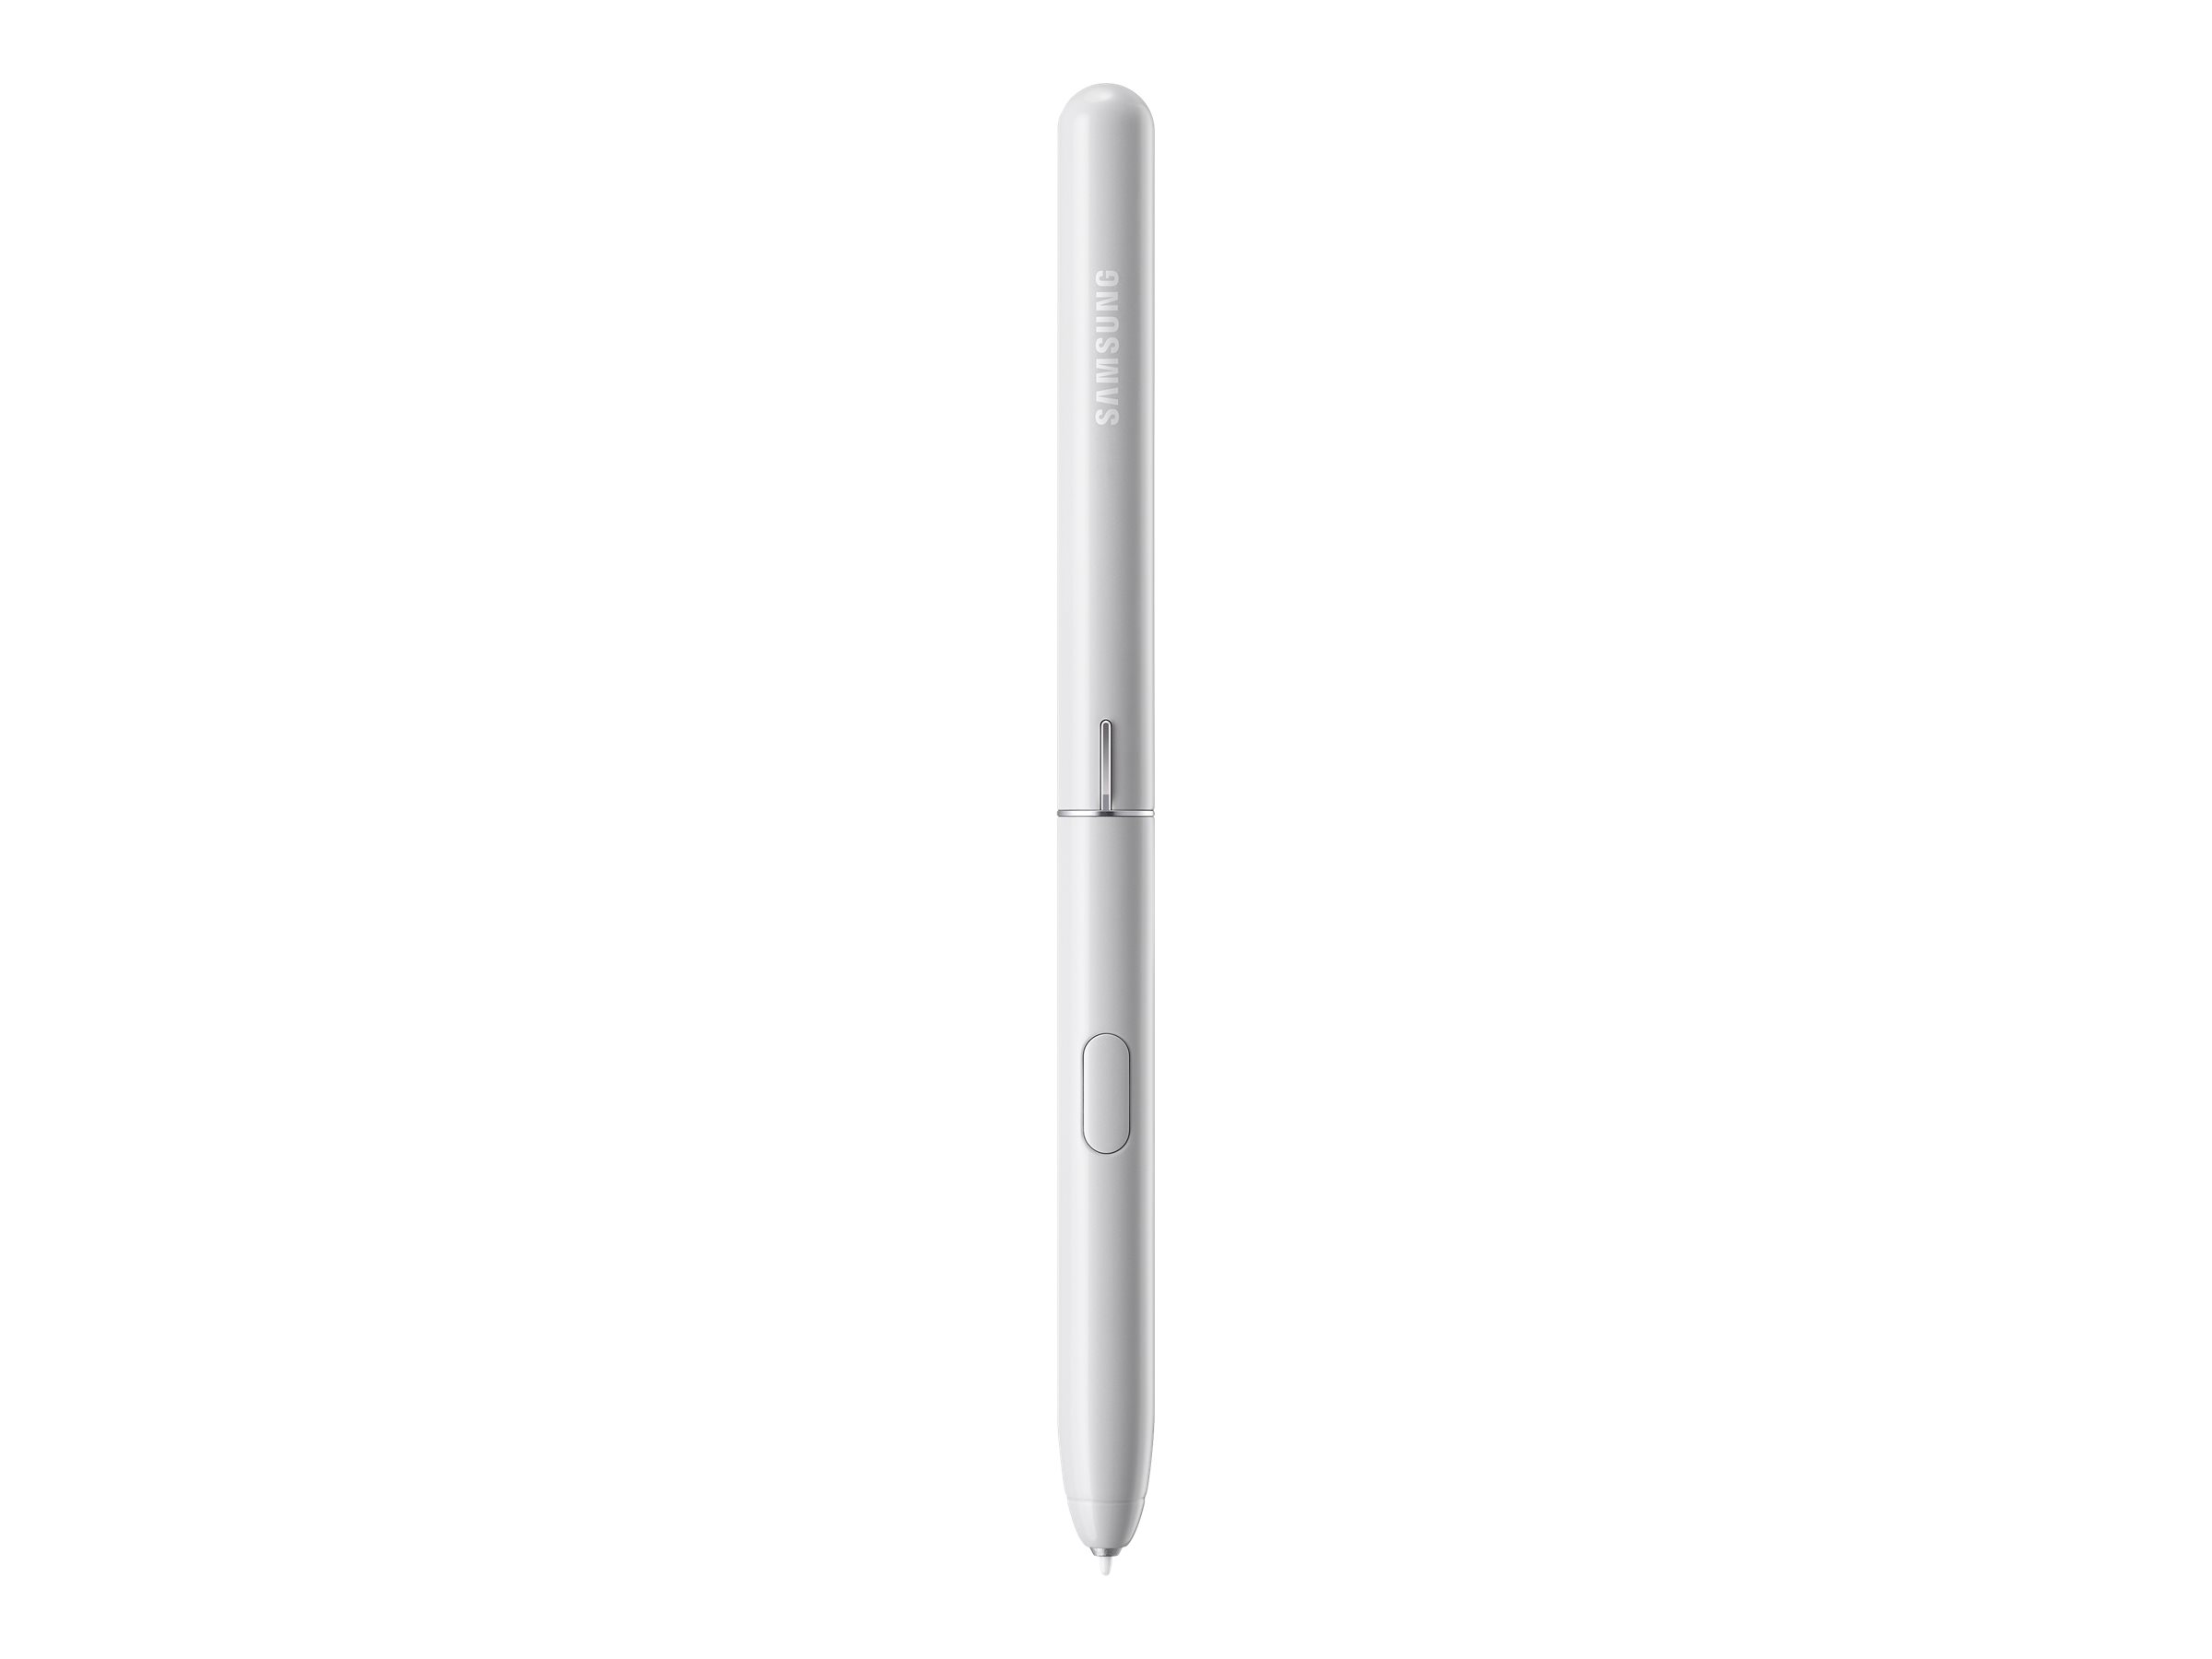 Samsung Galaxy Tab S4 105 64gb Tablet With S Pen Grey Sm